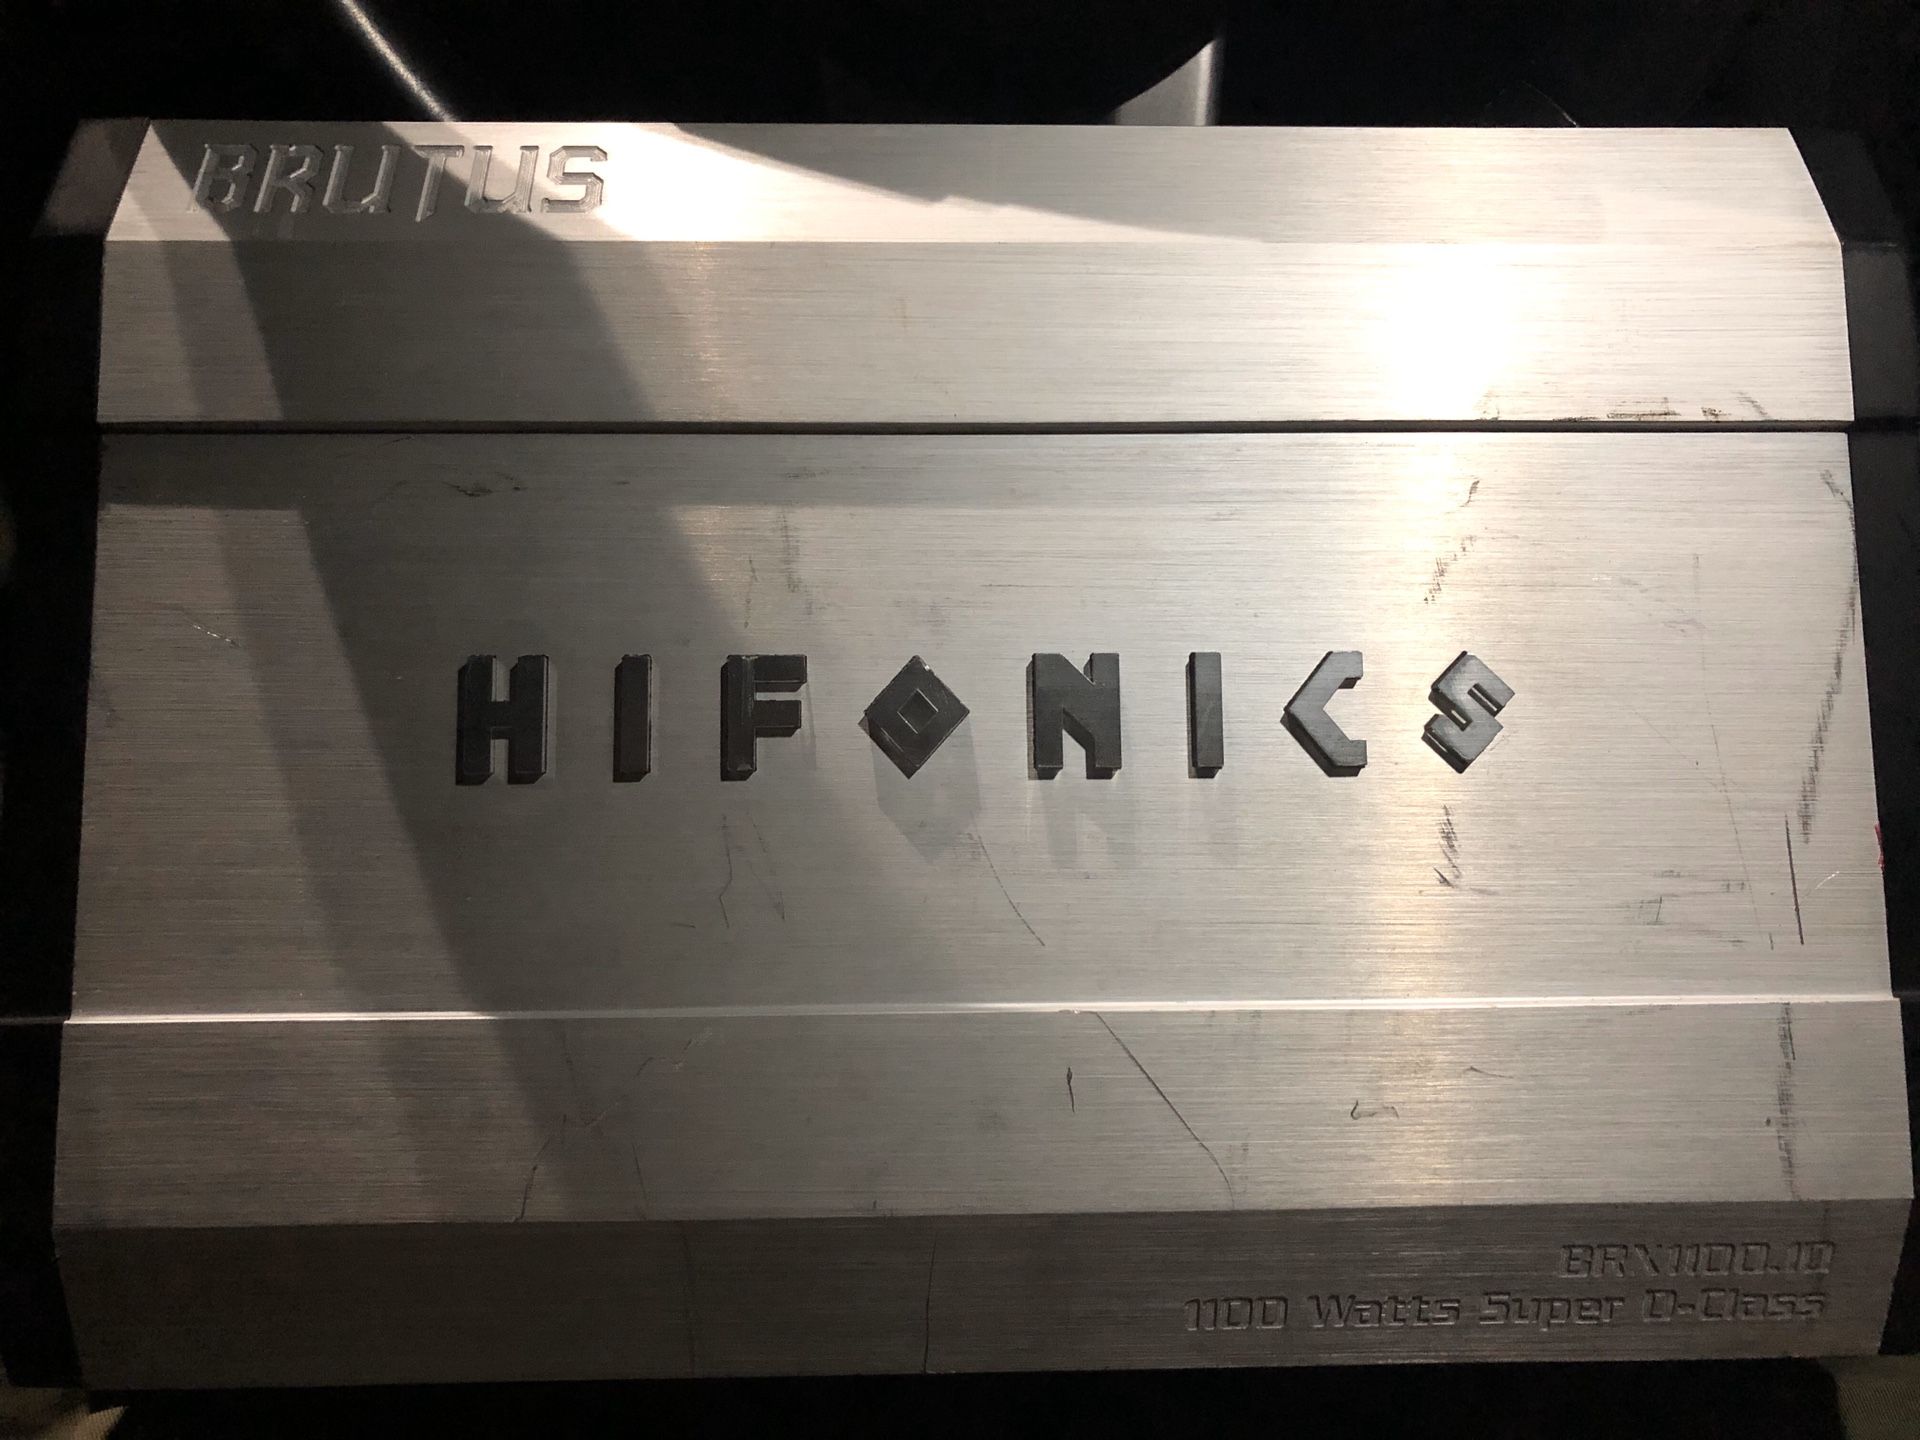 Brutus Hifonics amplifier